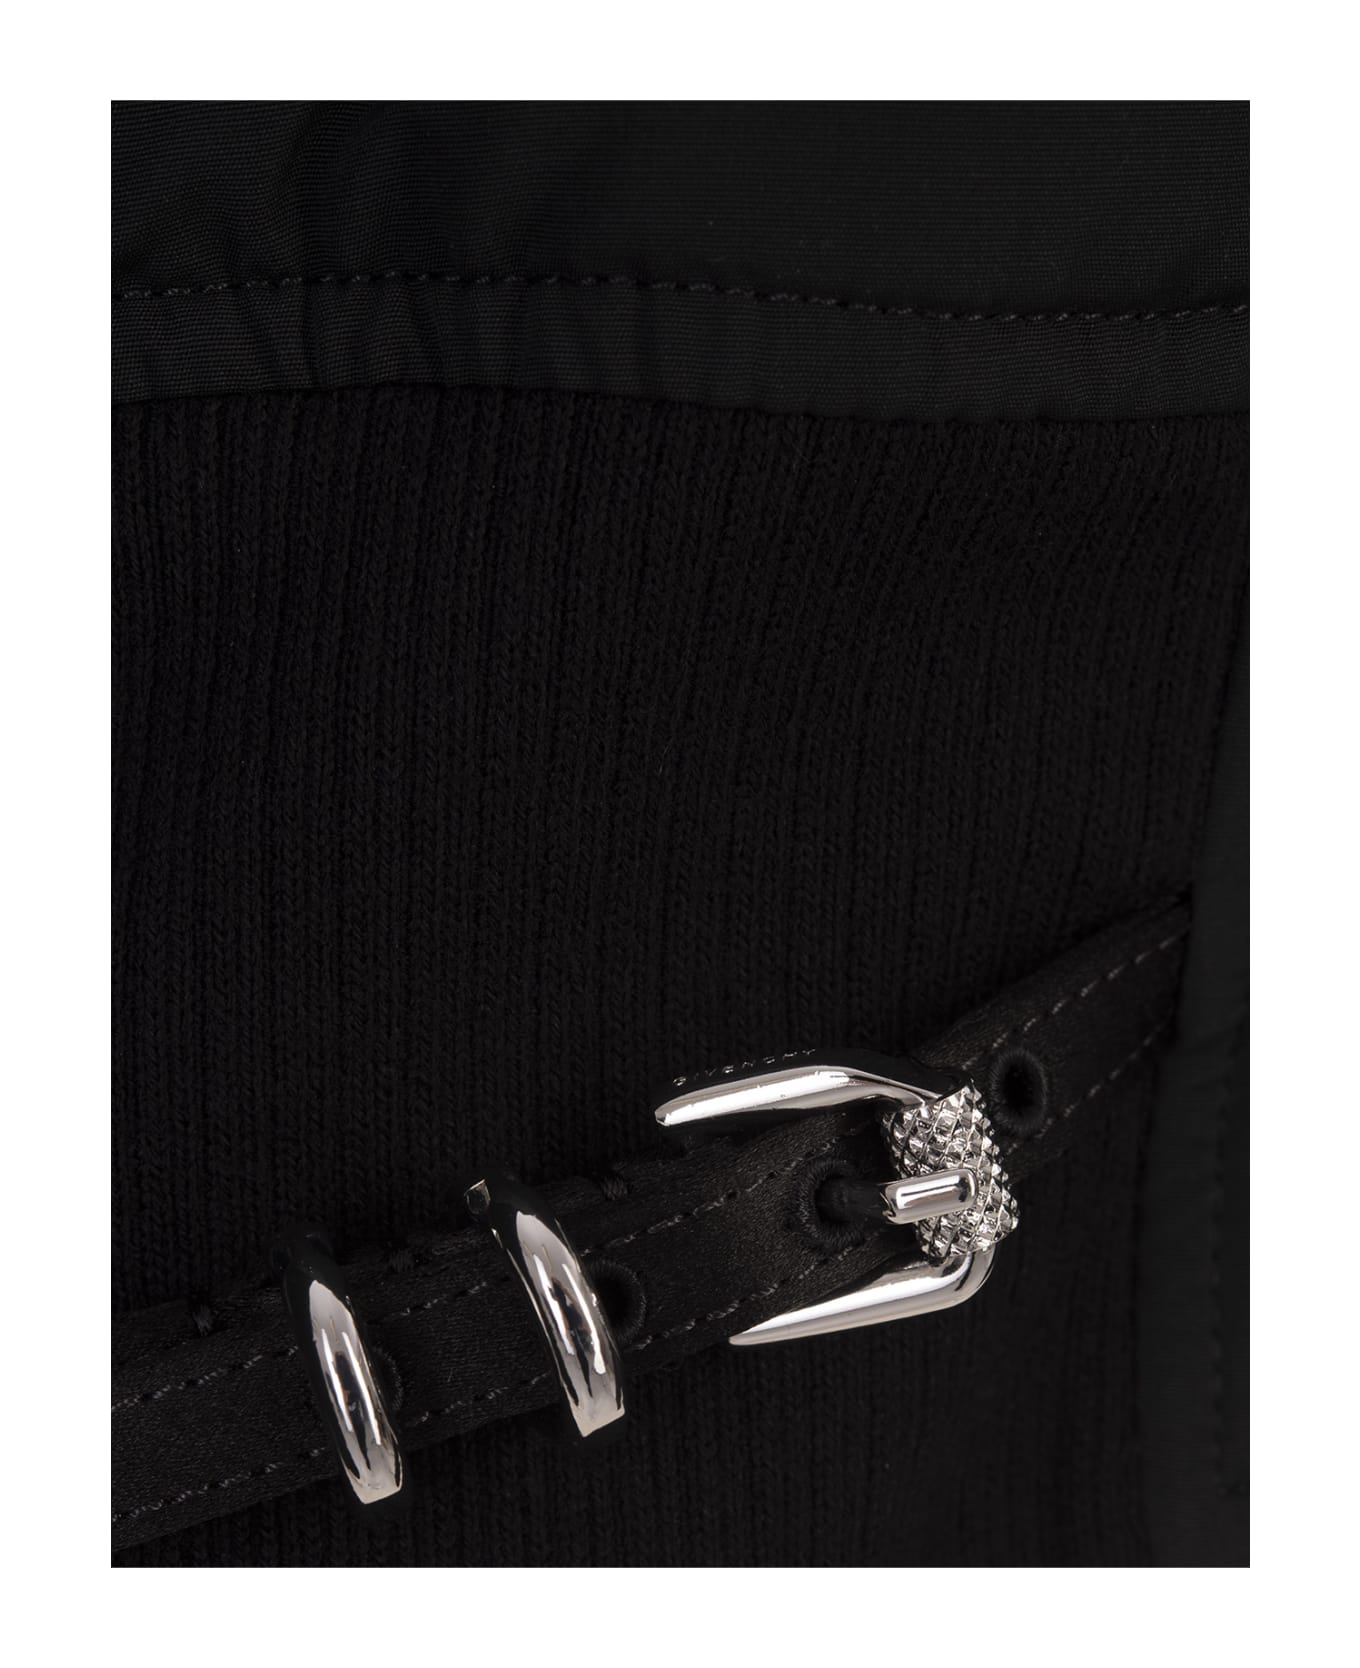 Givenchy Voyou Bomber Jacket In Black Taffeta Cotton - Black